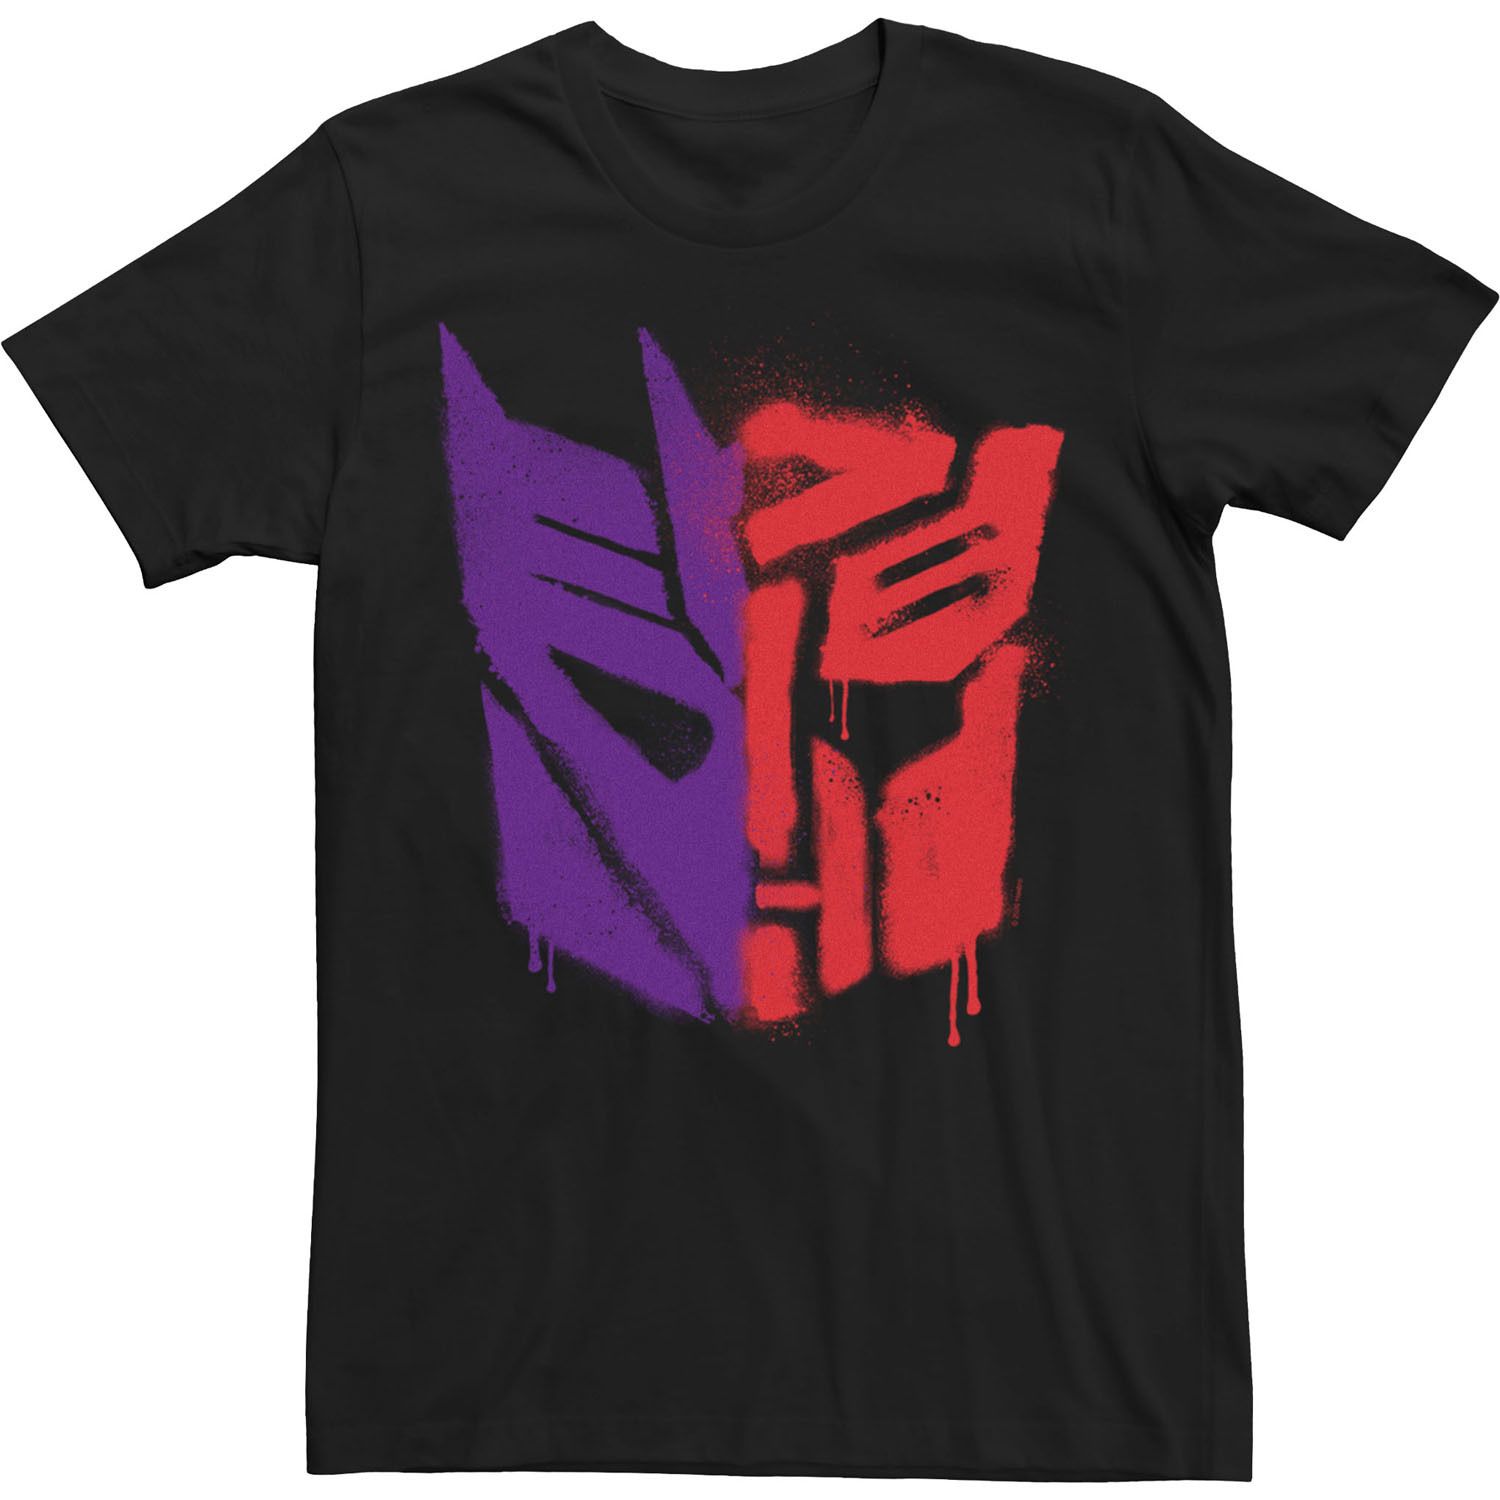 Мужская футболка Transformers: War For Cybertron спрей-краска с разделенным логотипом Licensed Character